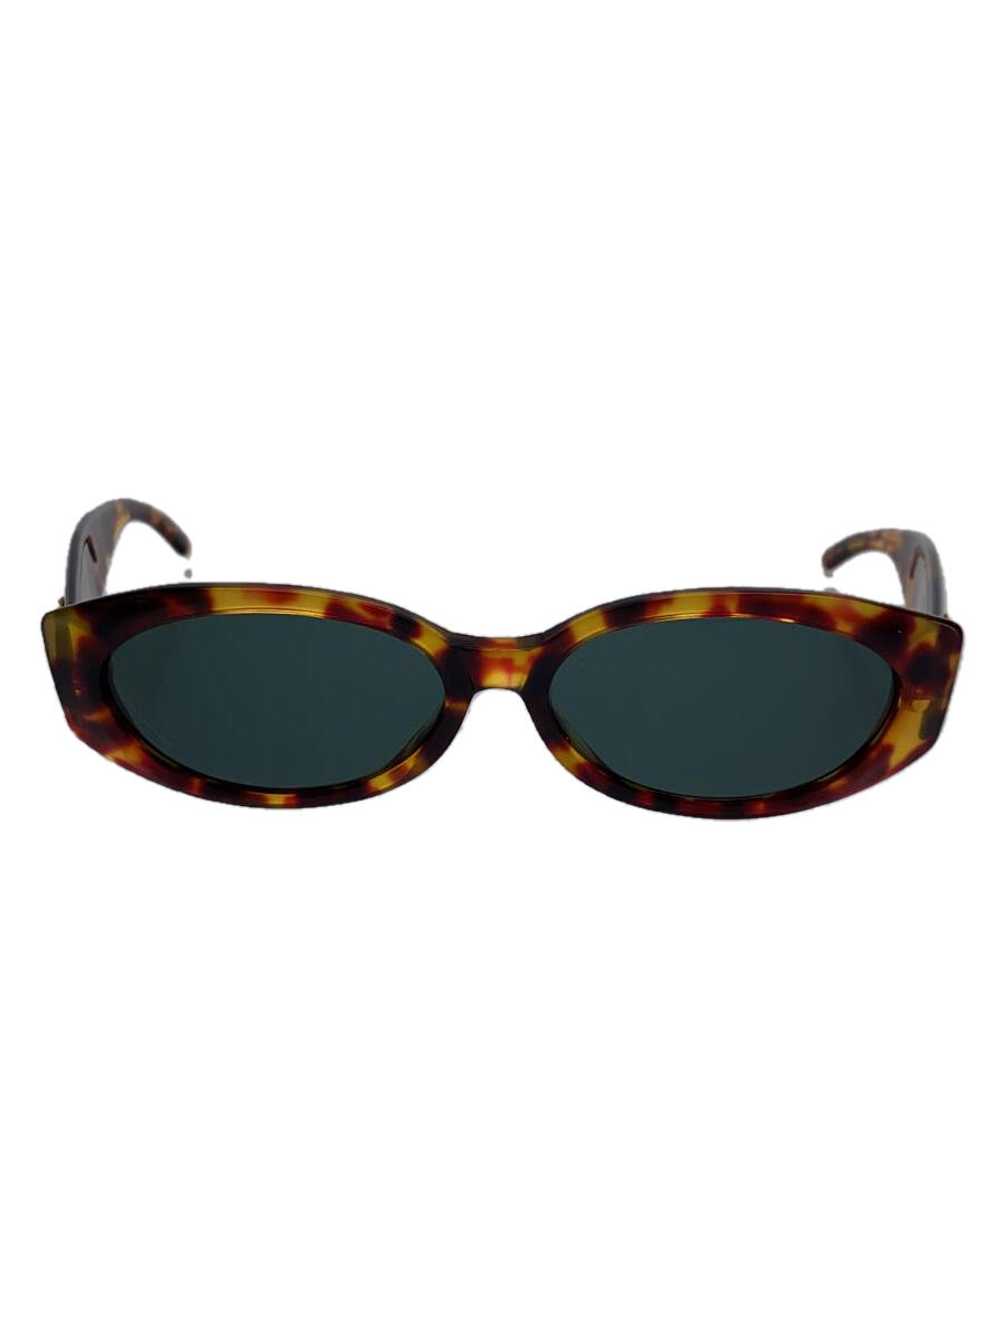 Gucci Sunglasses Wellington Celluloid 2196 S - image 1